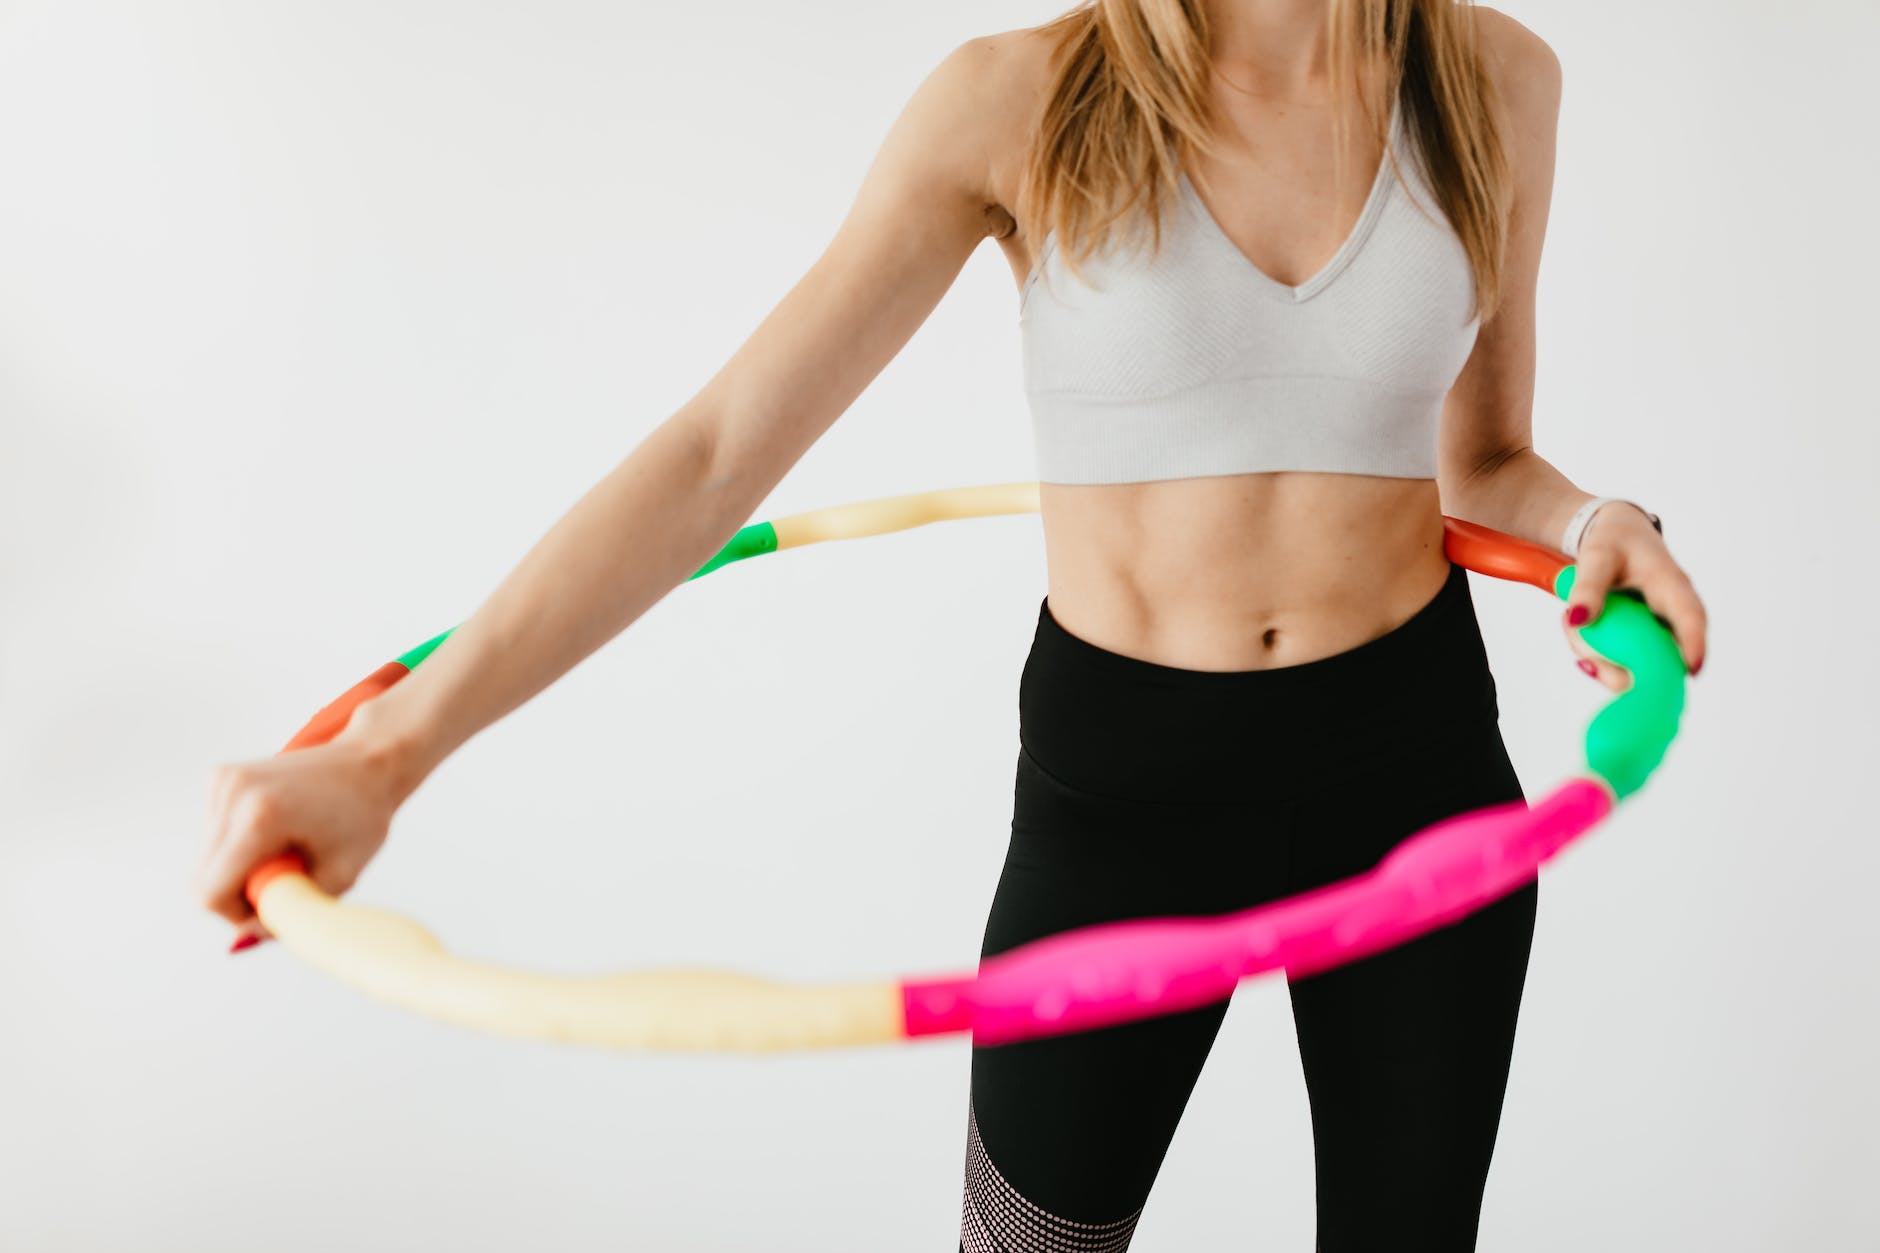 crop sportswoman exercising with gymnastic hula hoop